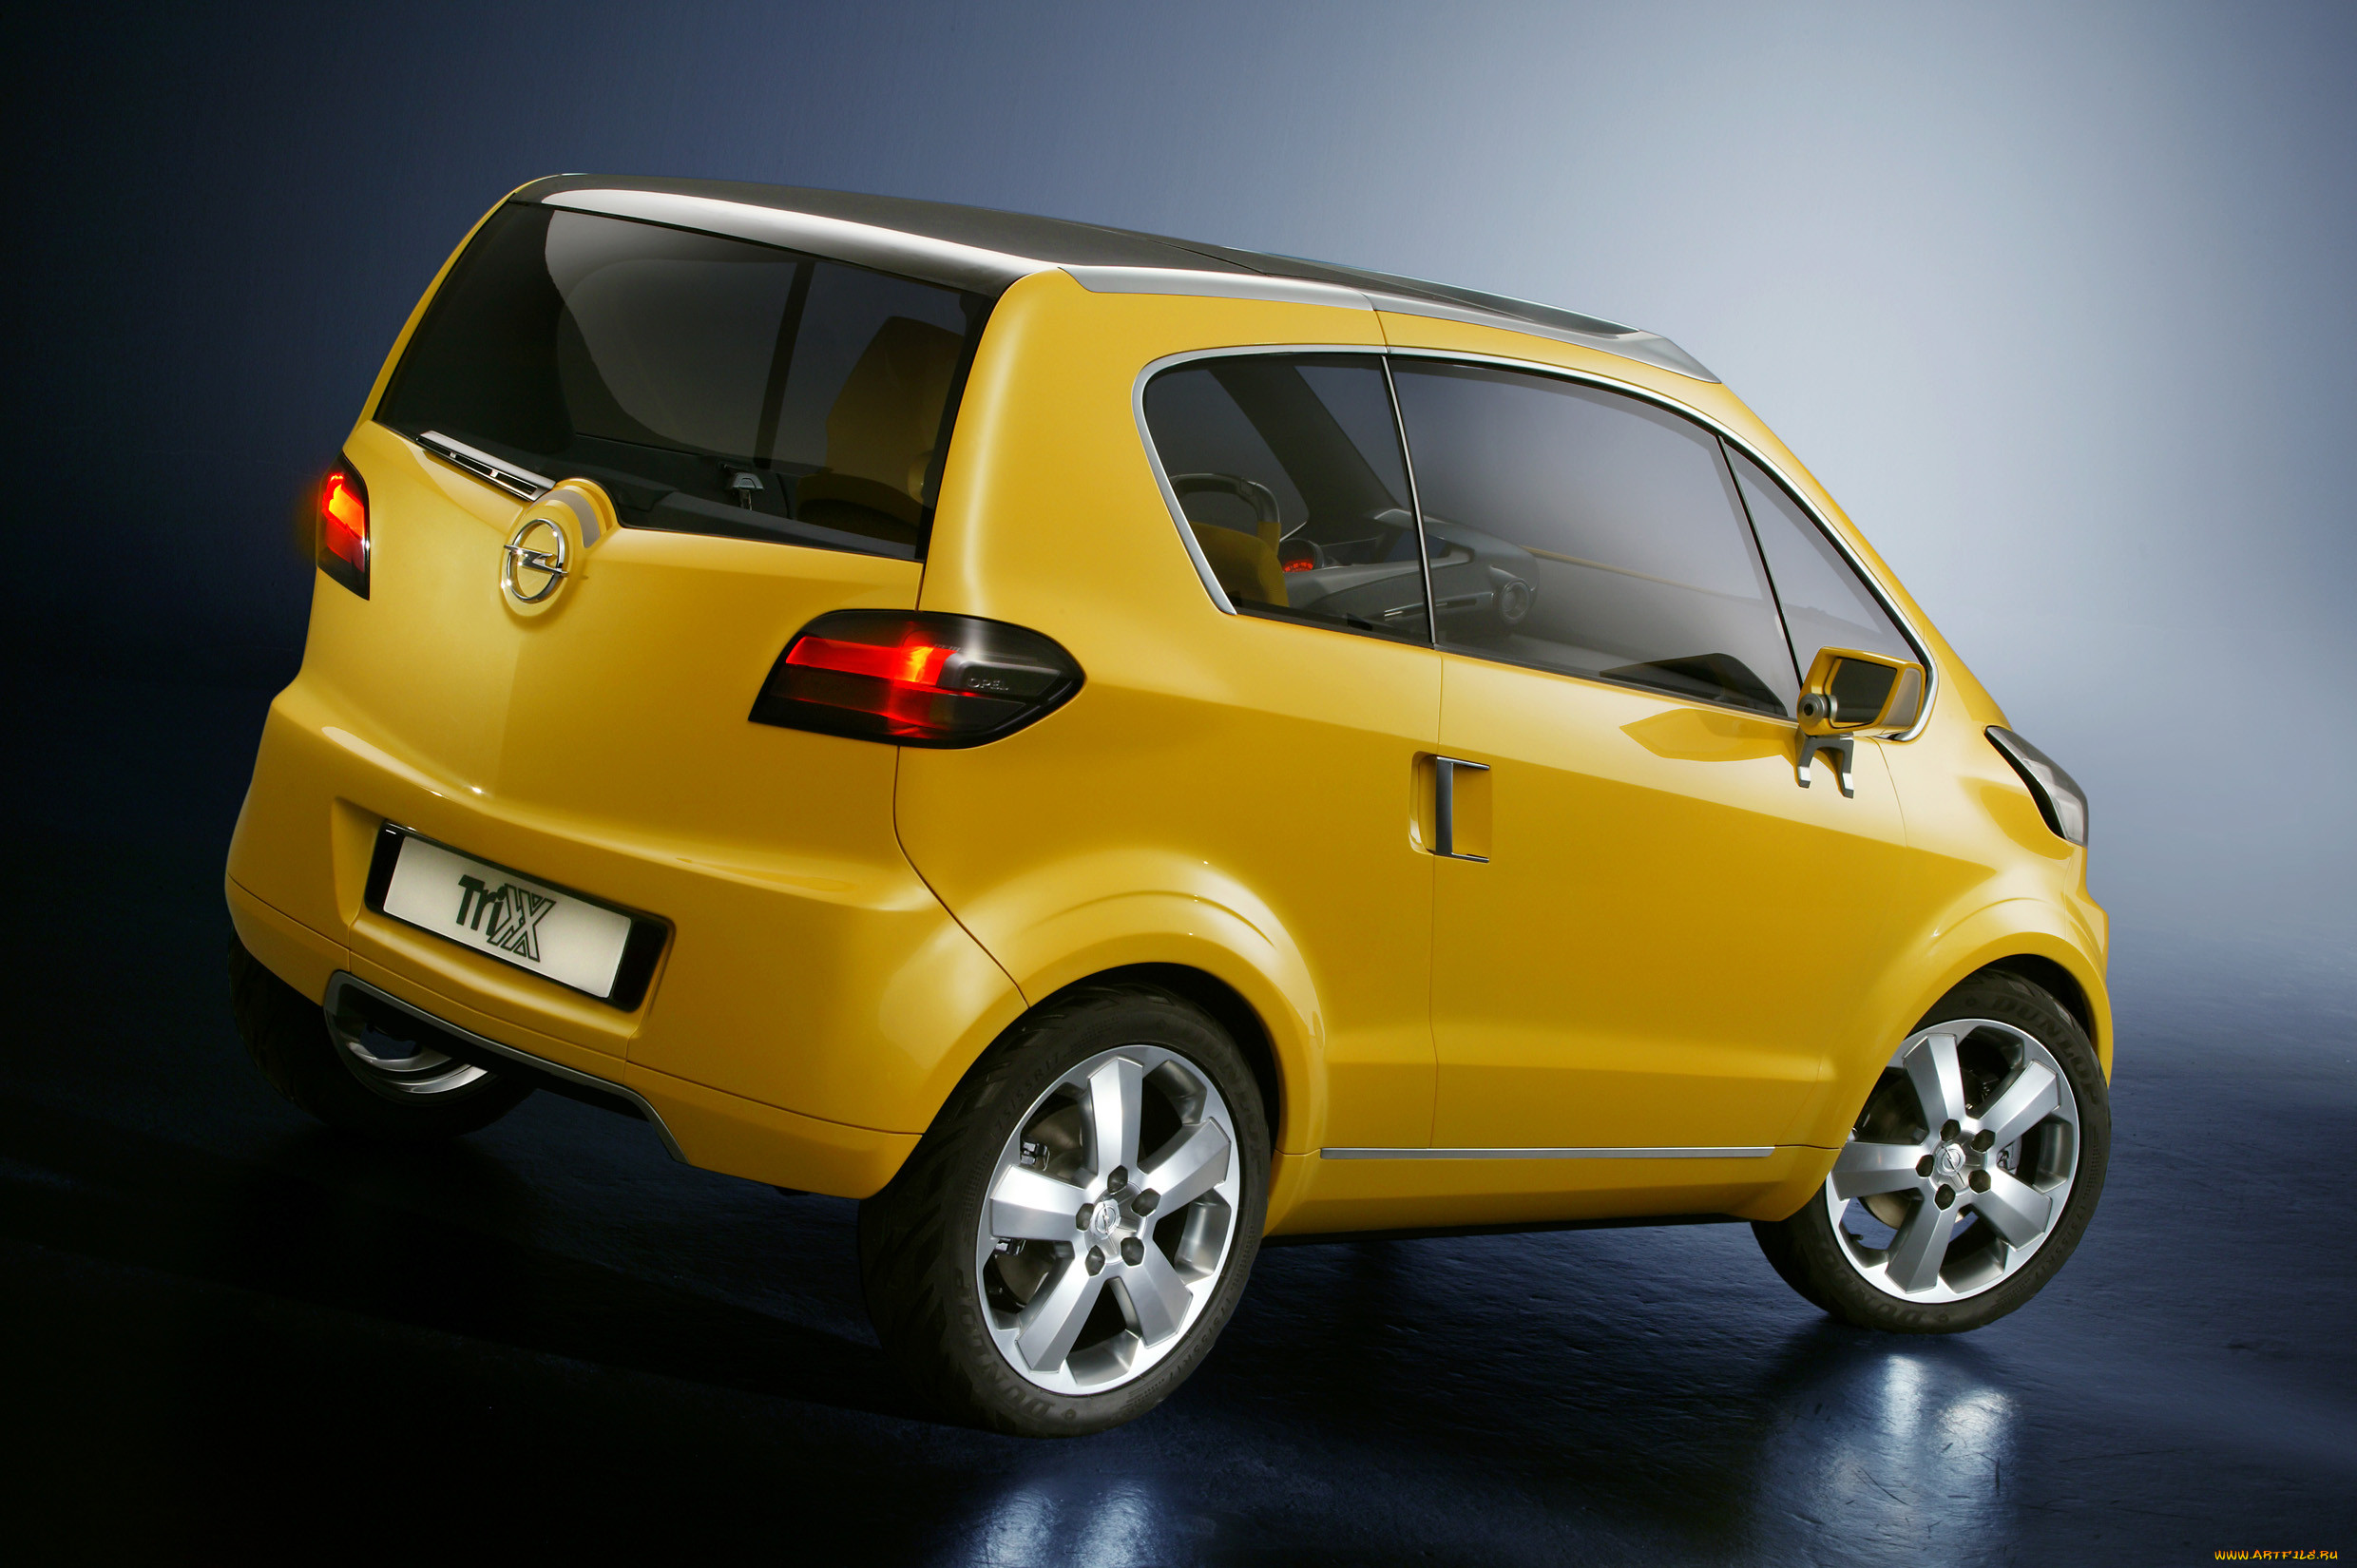 Иномарка стоимость. Opel Trixx. Форд малолитражка. Opel Trixx Concept. Сузуки малолитражка модель.